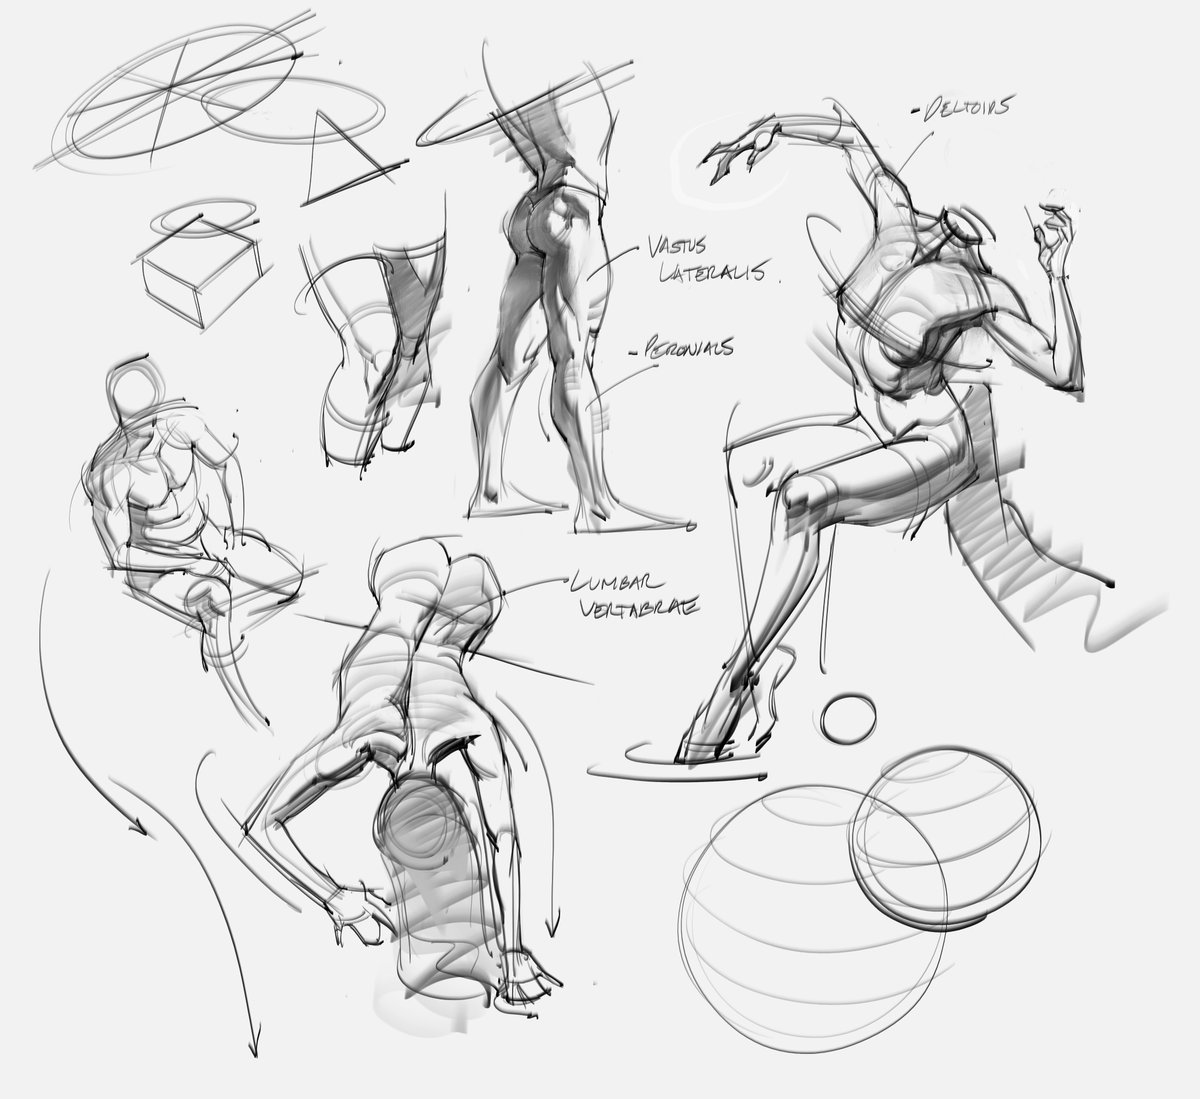 Morning gesture and anatomy drawings! #anatomy #humananatomy #gesture #lineart #art #legs #torso #figuredrawing #gesturedrawing #gottogetbetter #shading #sketches #doodles #goals